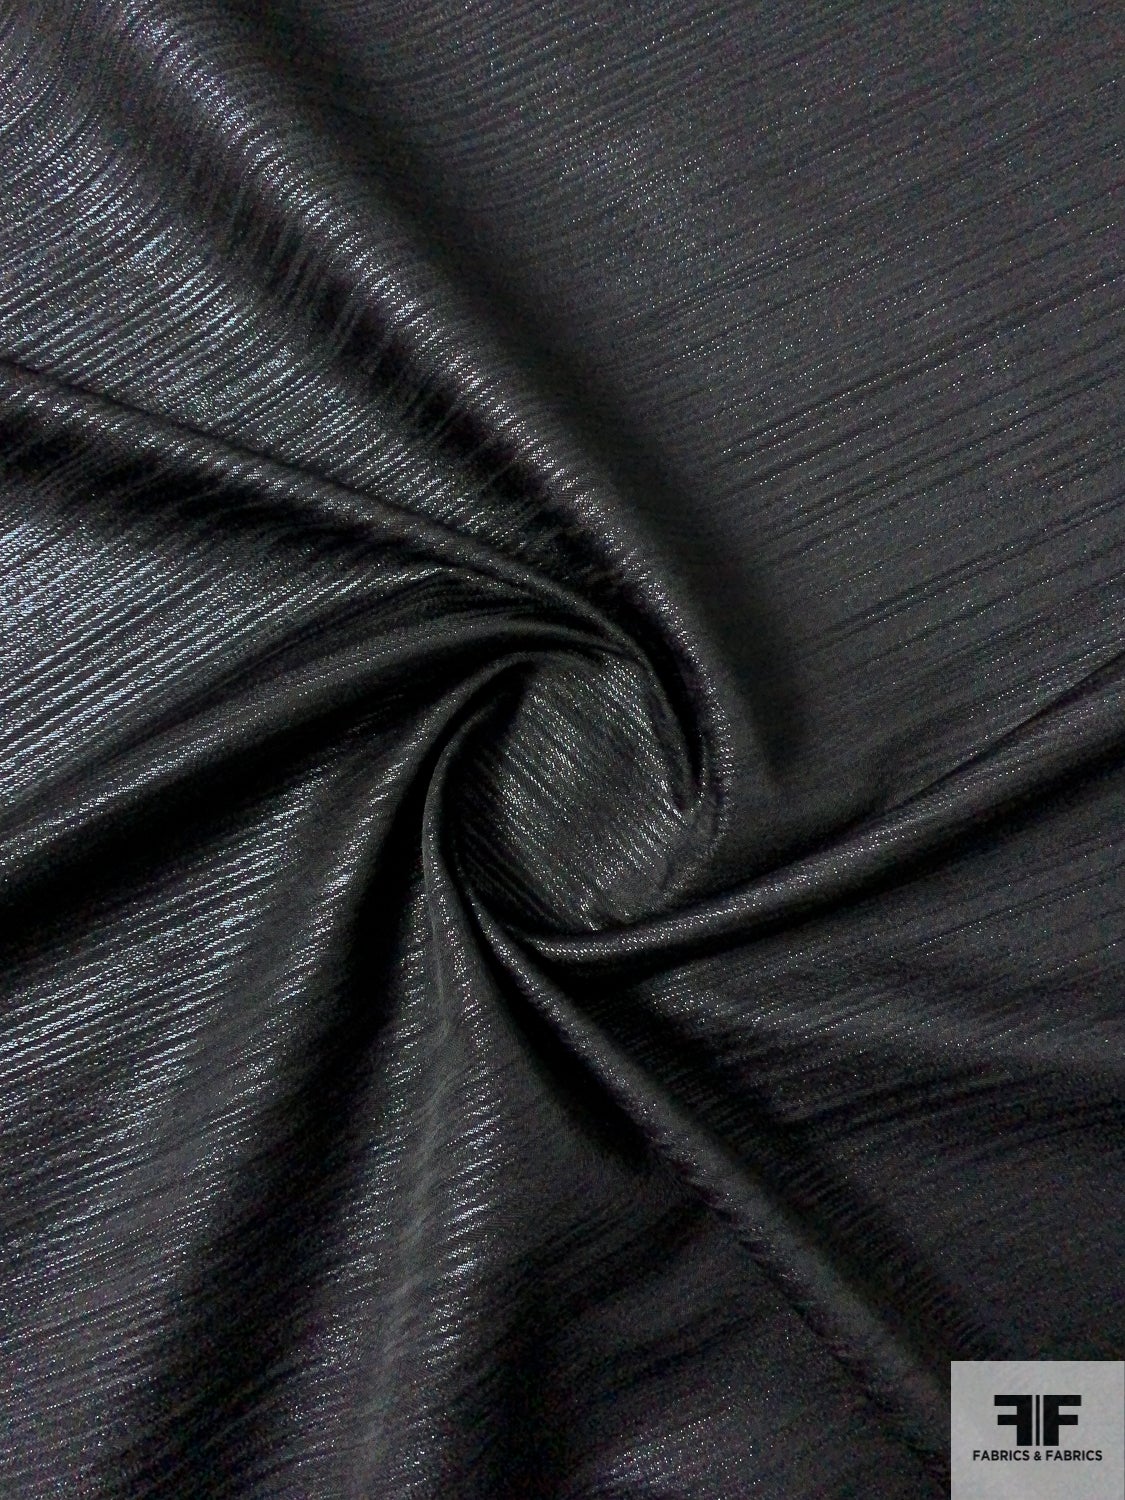 Pico Textiles Black Cloth Cotton Fabric - 45 Wide - 15 Yards Bolt - Style#  4505 